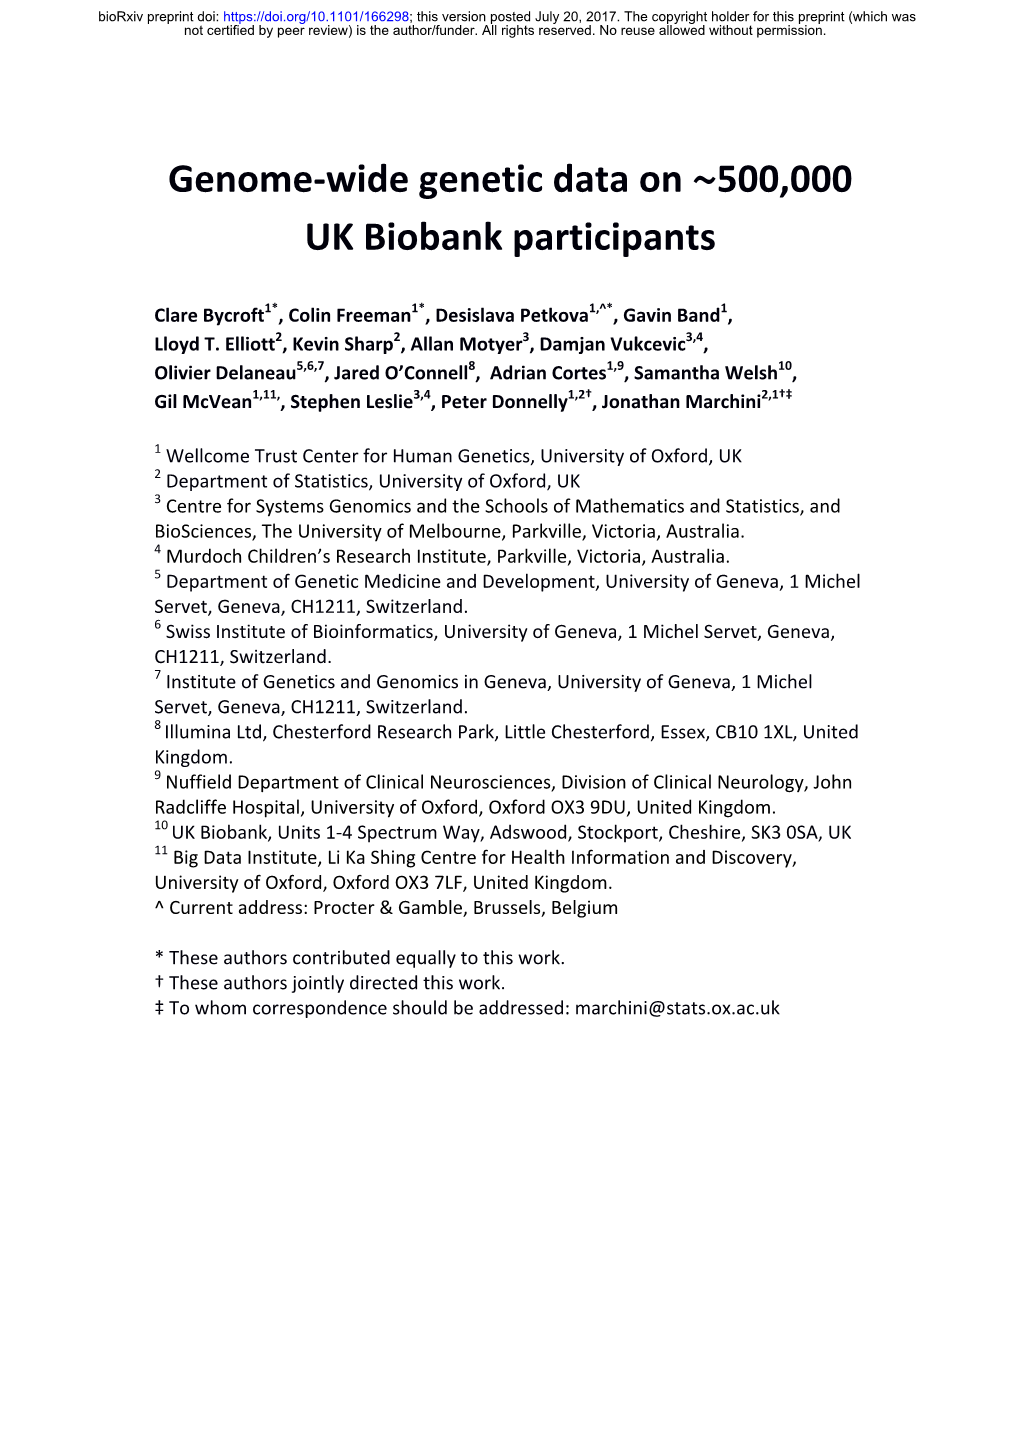 500000 UK Biobank Participants